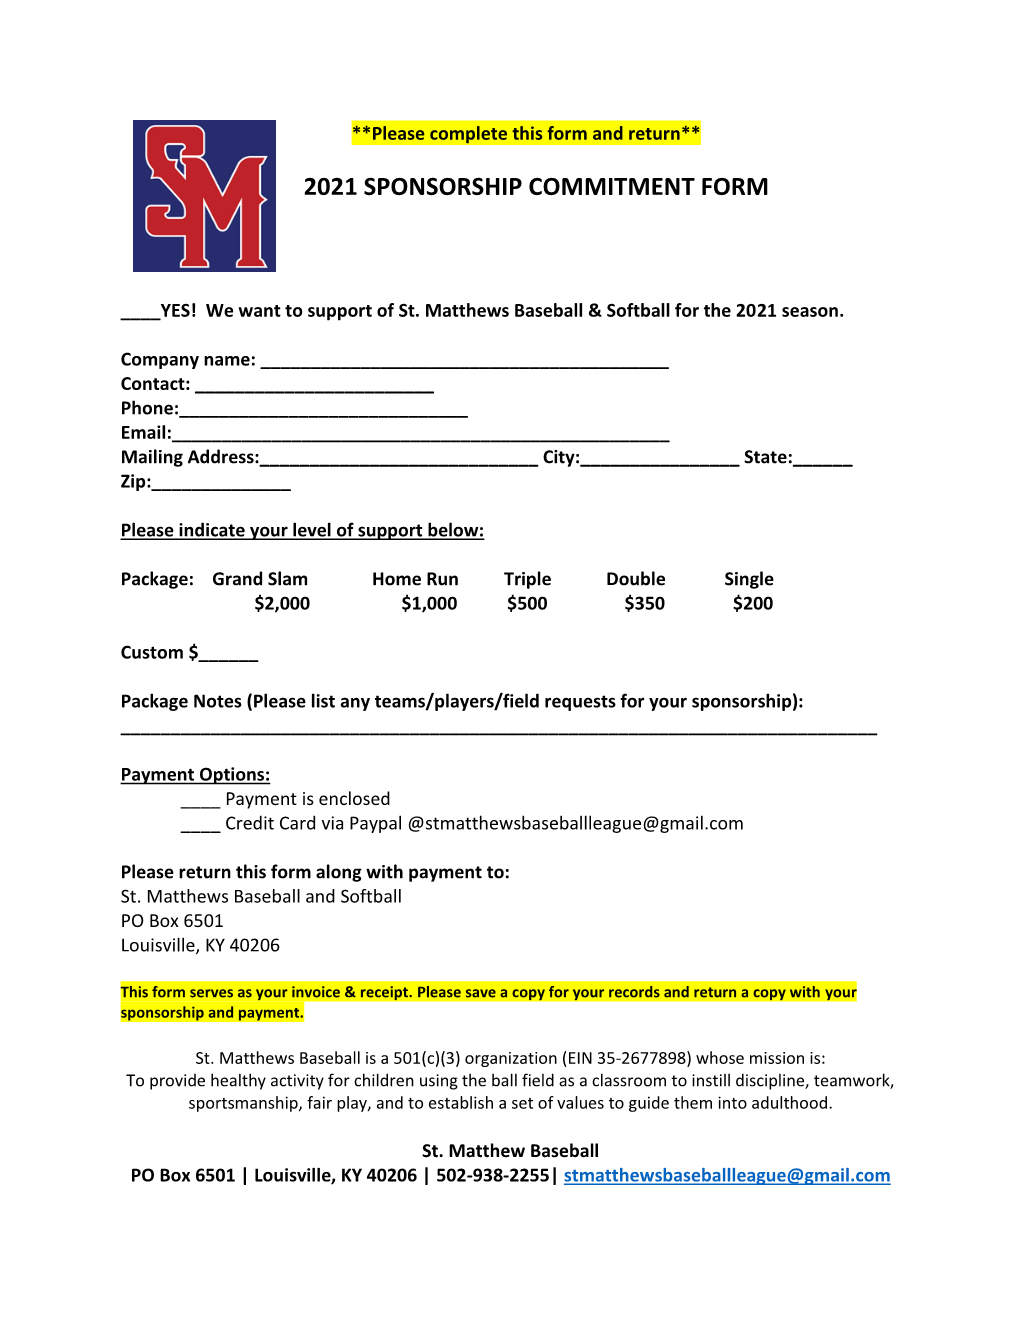 2021 Sponsorship Commitment Form